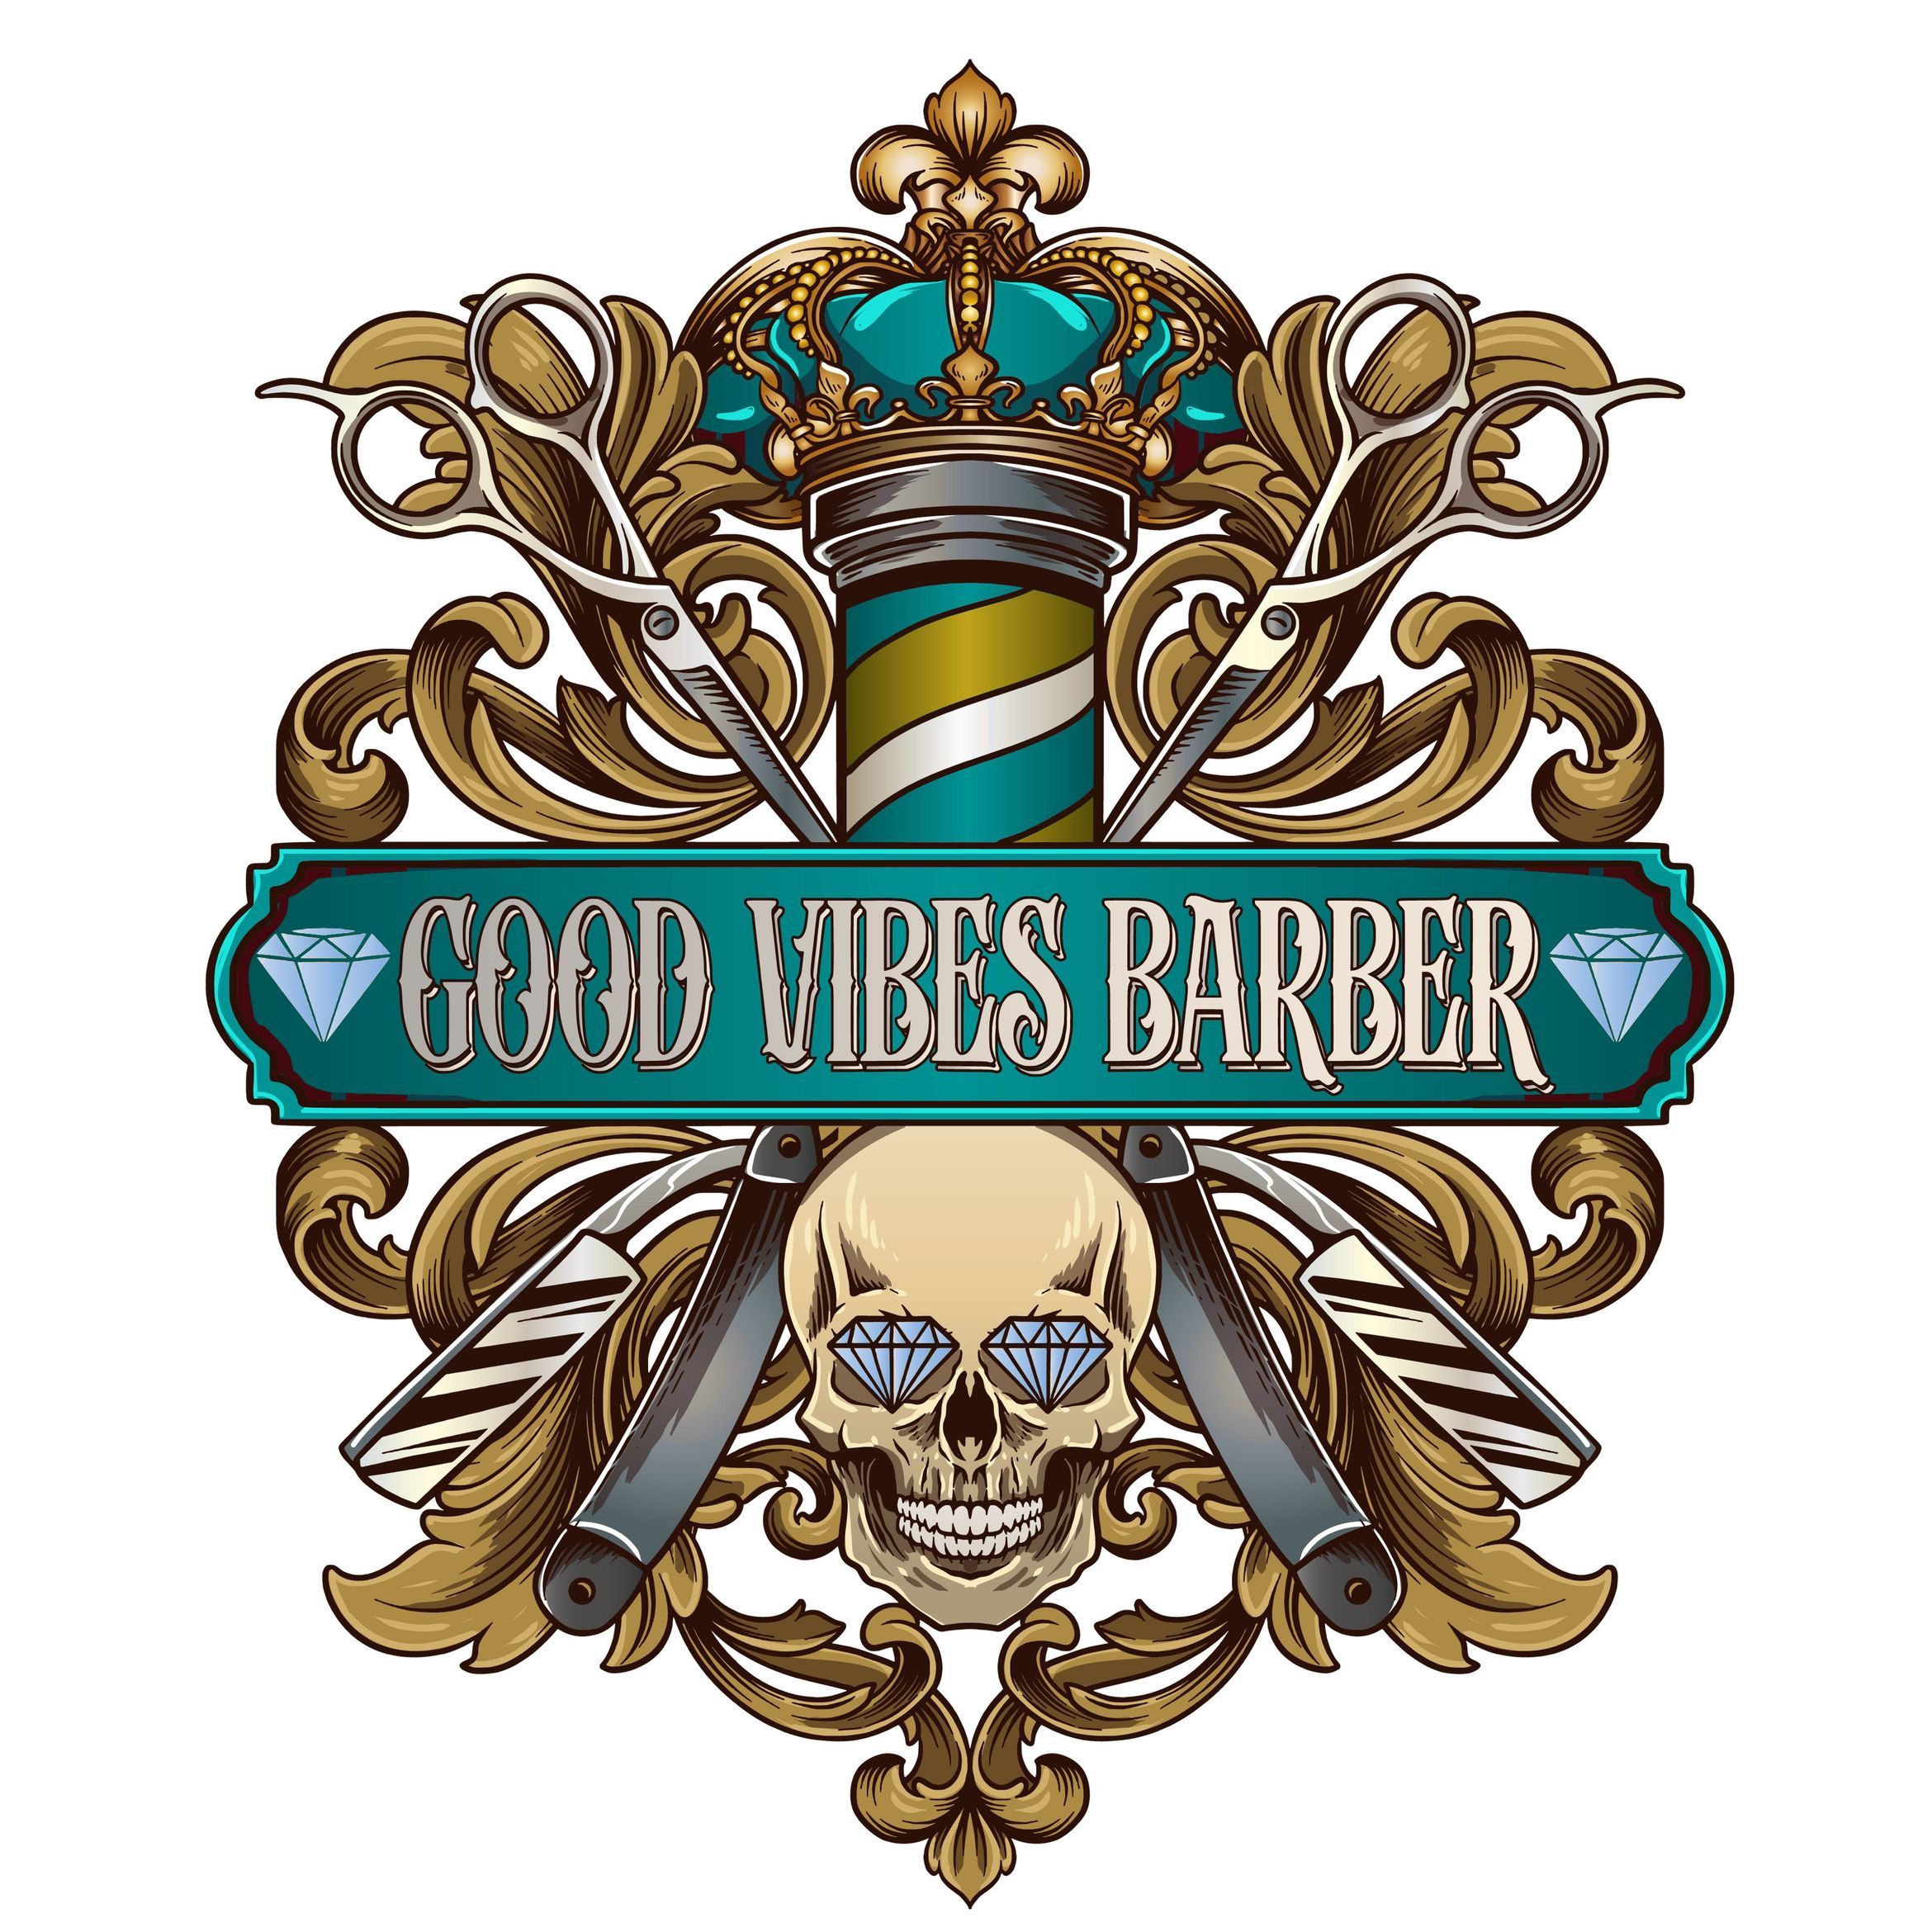 Good Vibes Barber Studio, 2220 J Street Suite 5, Sacramento, 95816